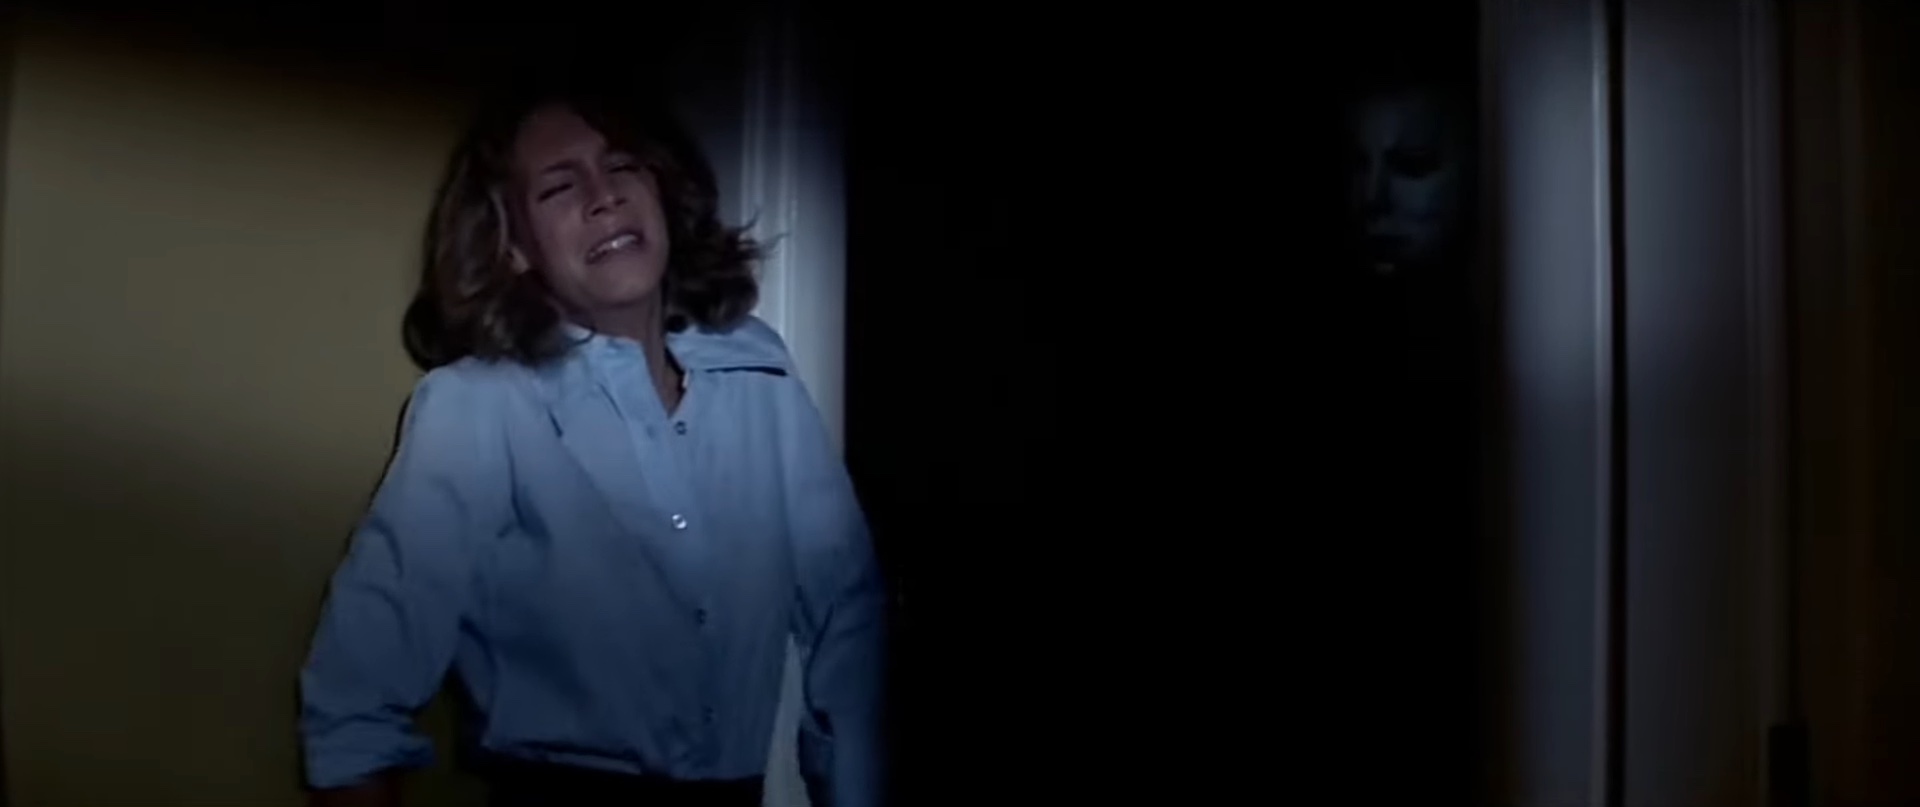 Laurie Strode e Michael Myers em "Halloween" (1978).